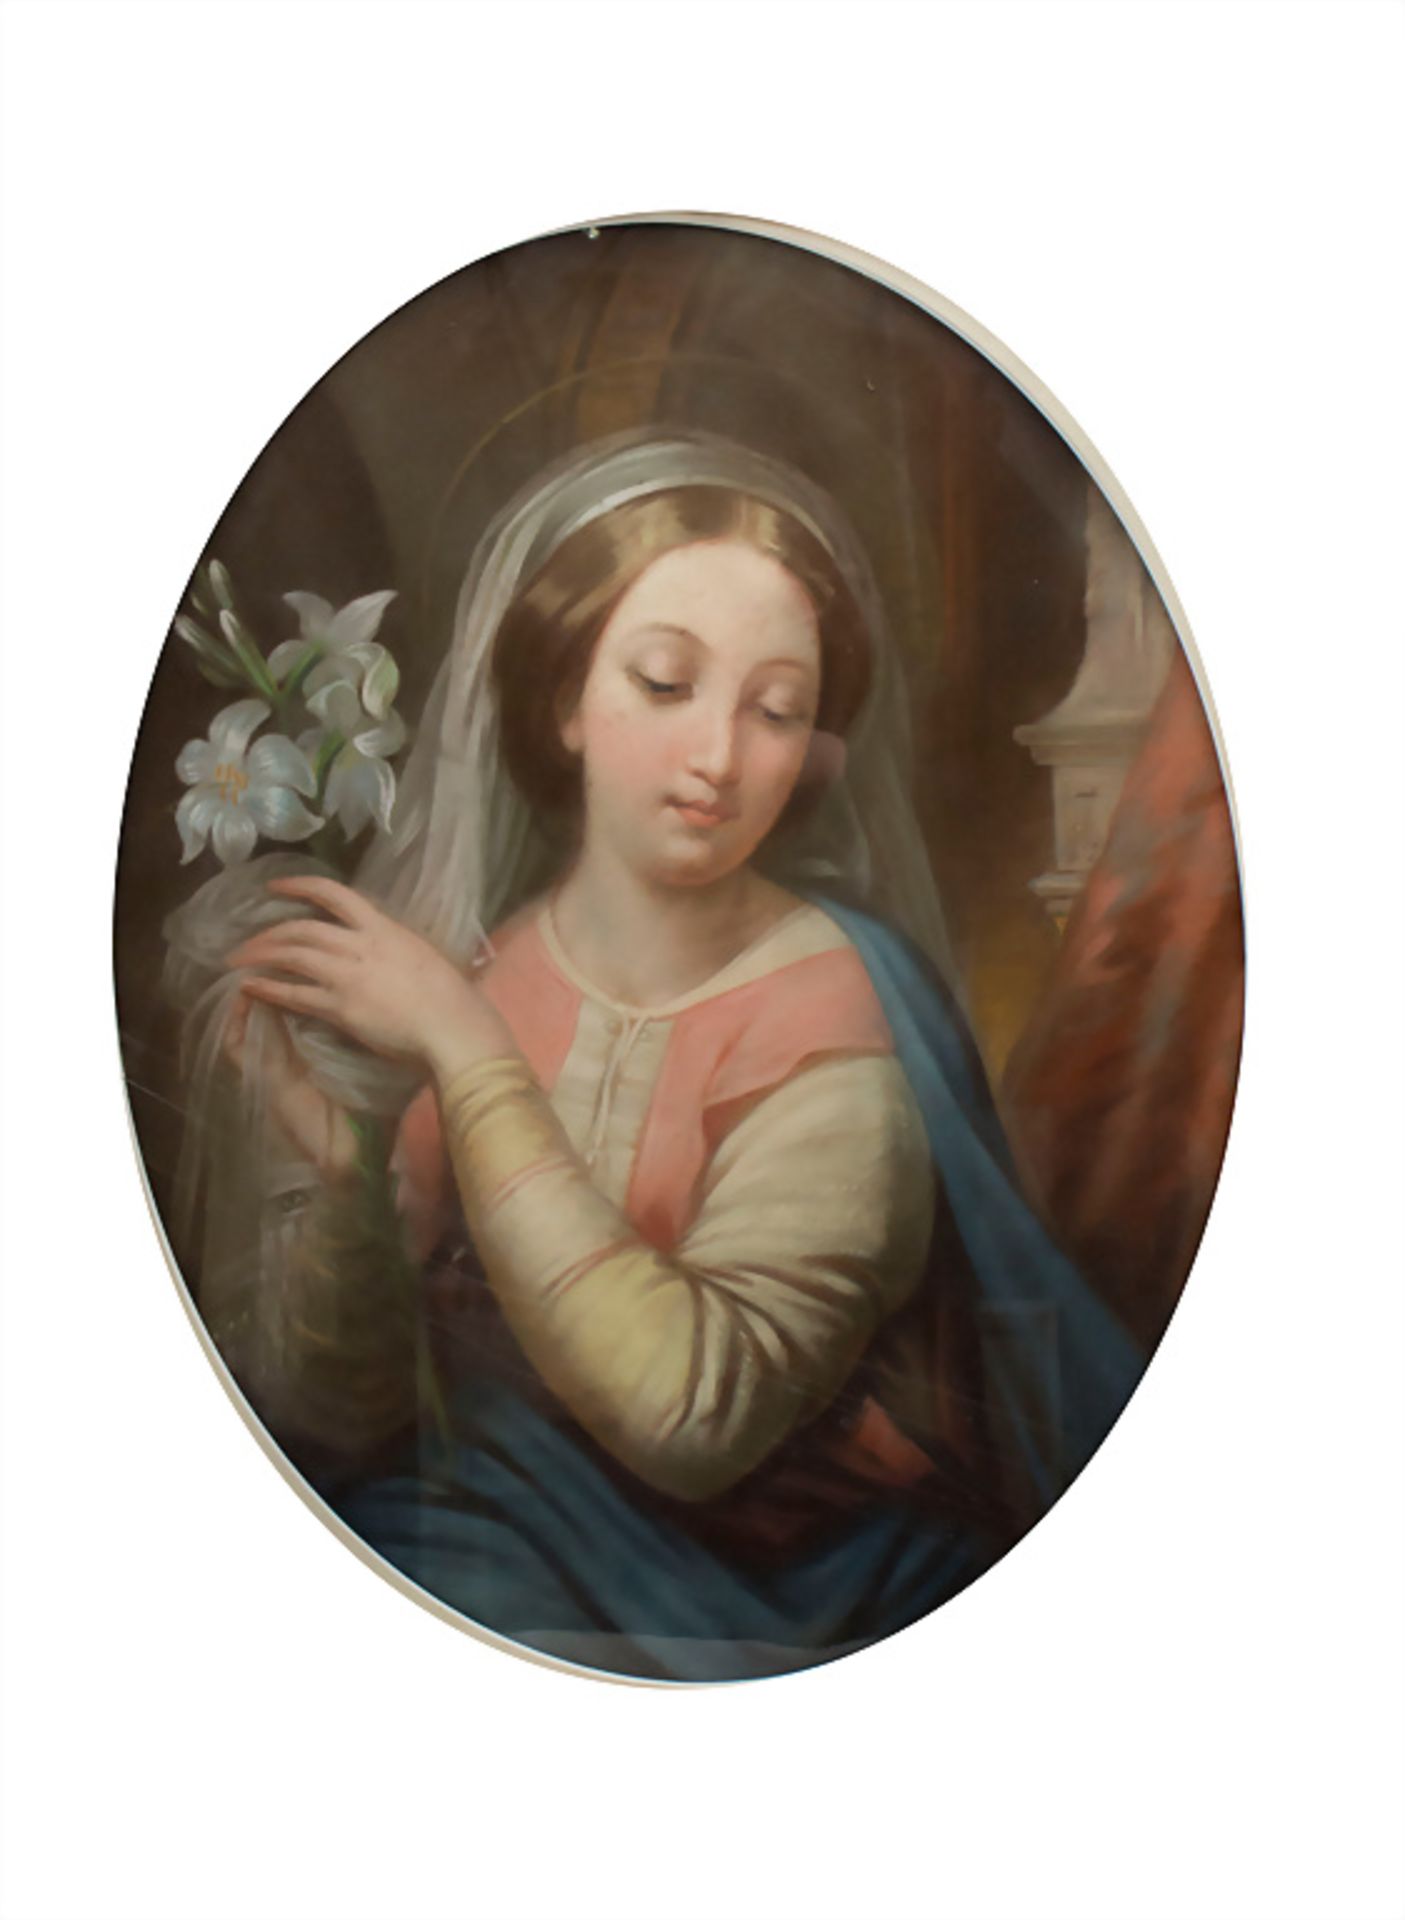 Unbekannter Künstler des 19. Jh., 'Heilige Maria mit Lilie' / 'Holy Mary with a lily', 1859